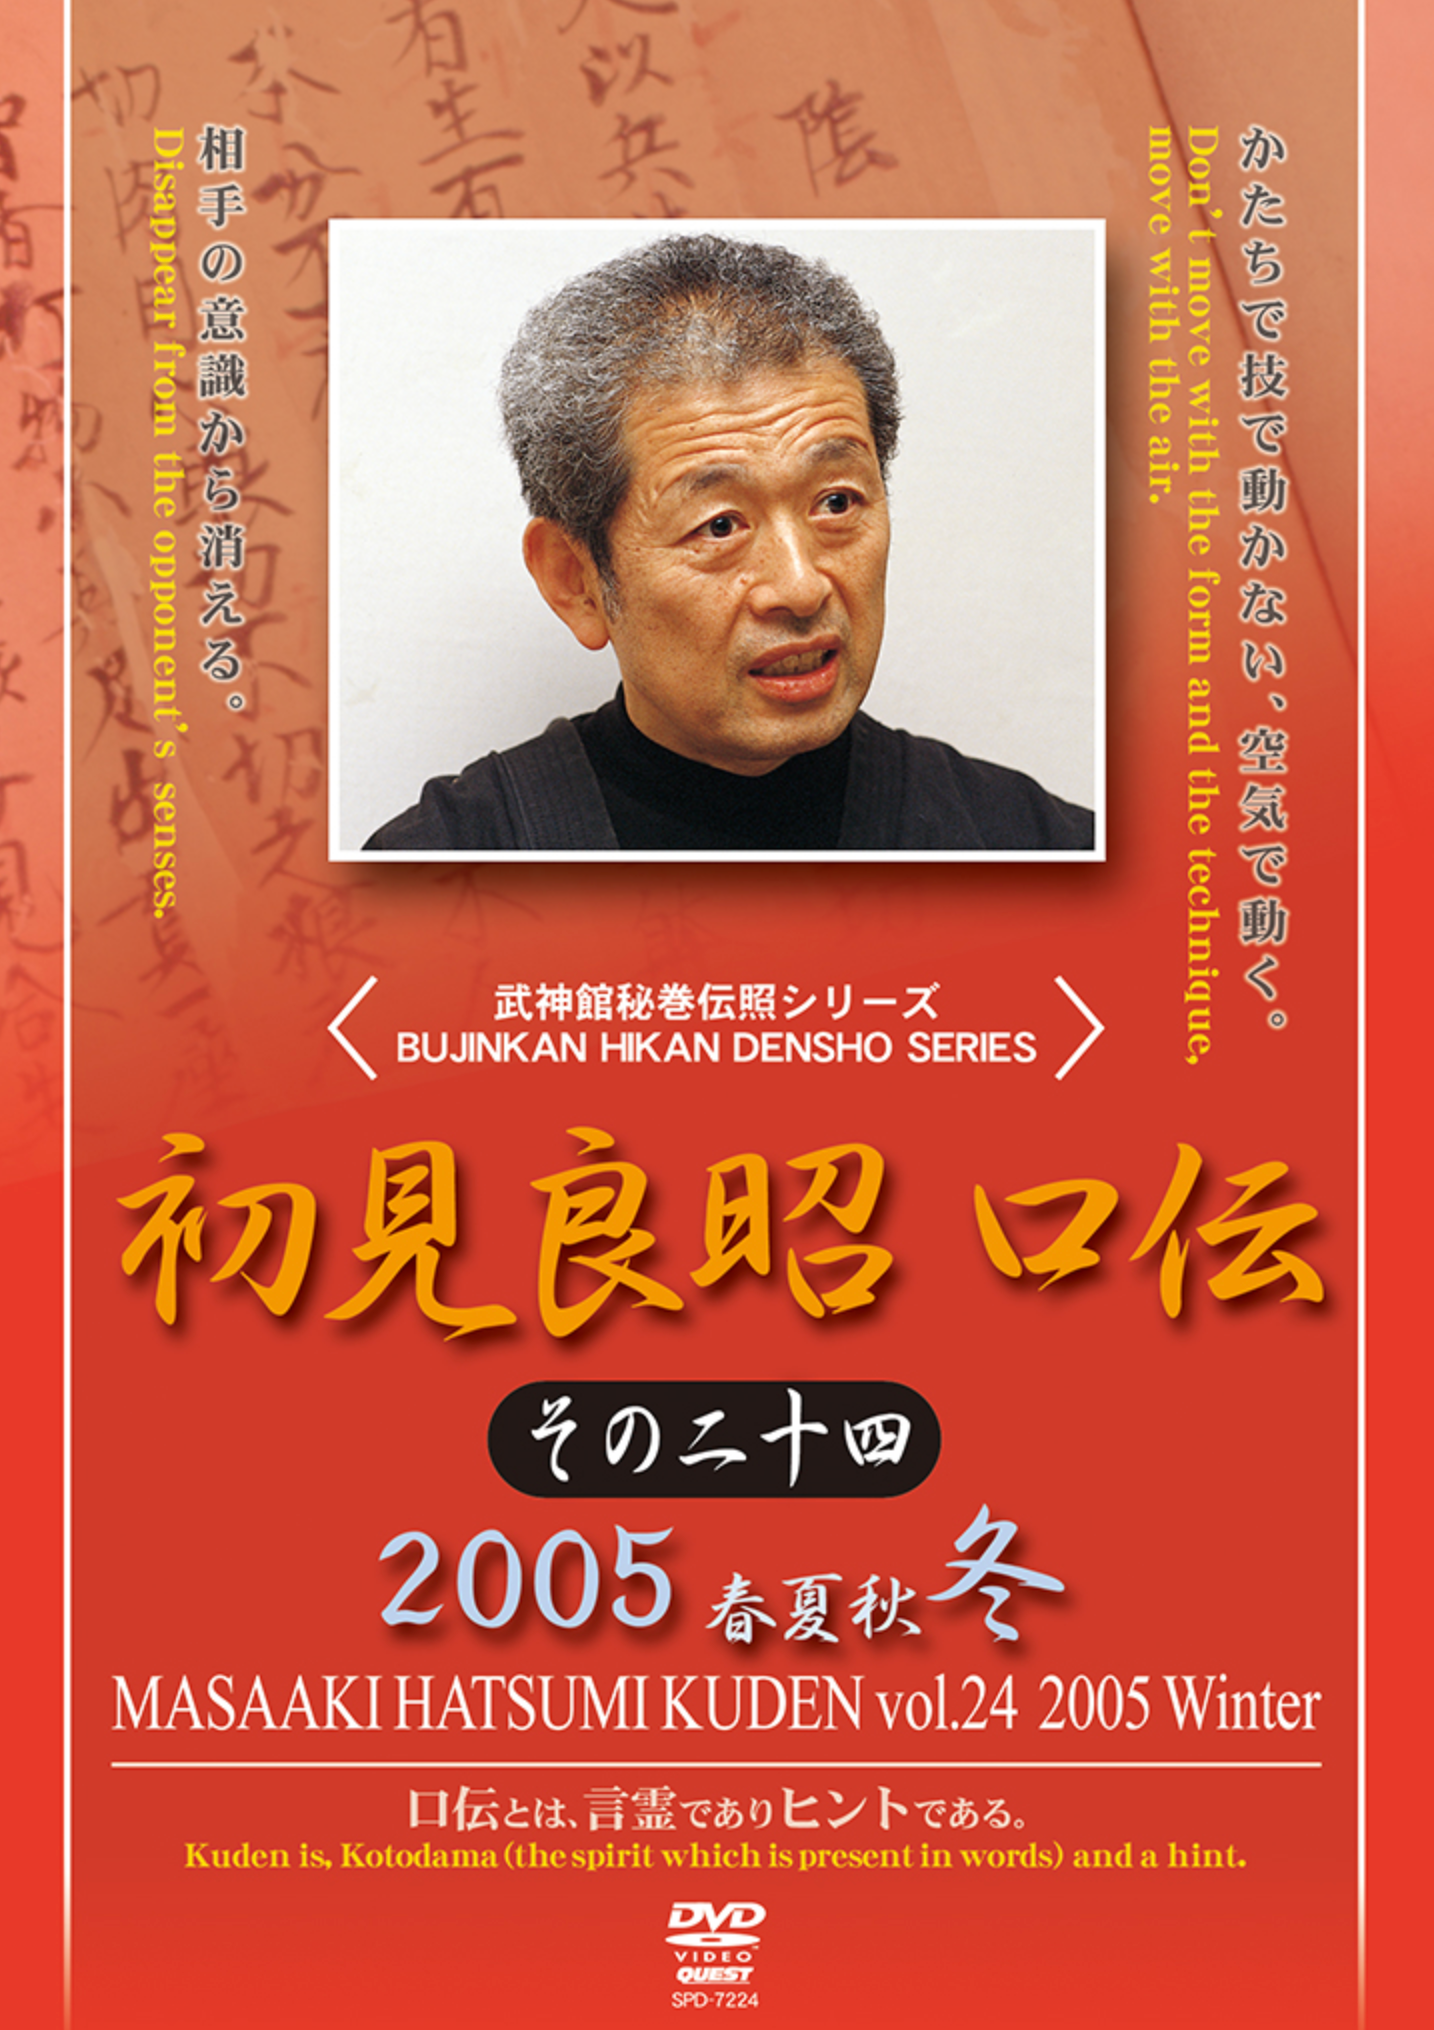 Kuden Vol 24 DVD with Masaaki Hatsumi - Budovideos Inc